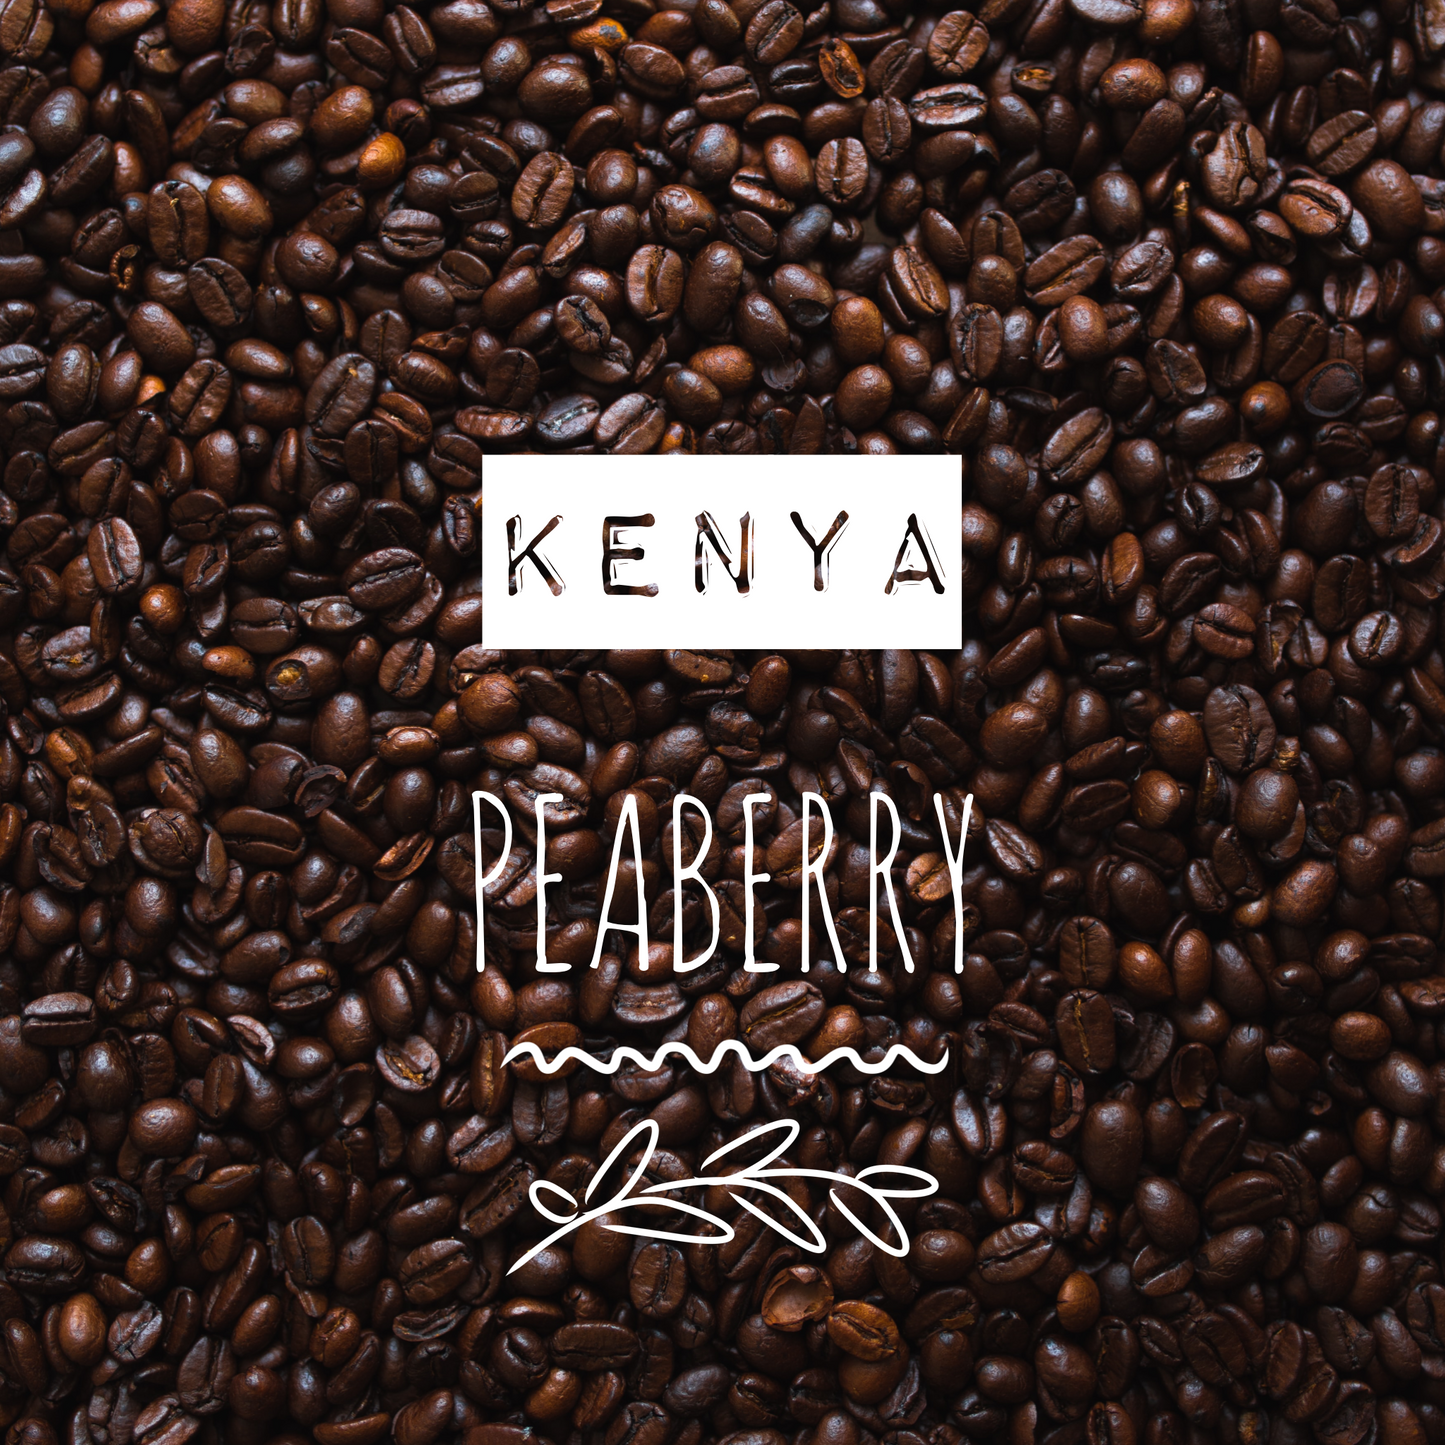 Kenya Peaberry